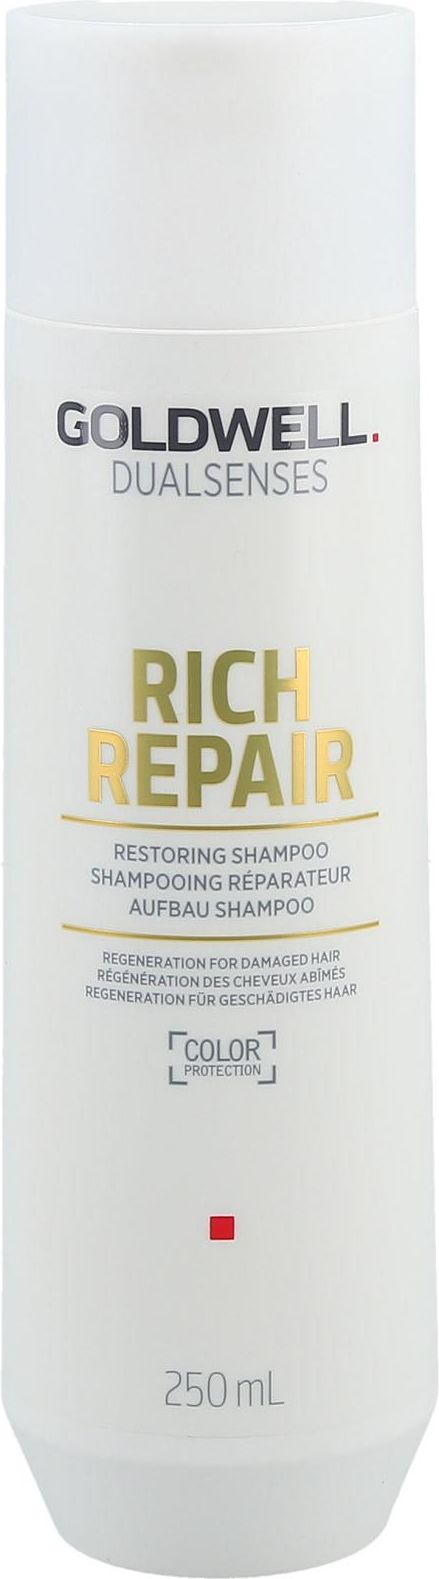 szampon dualsenses rich repair cena